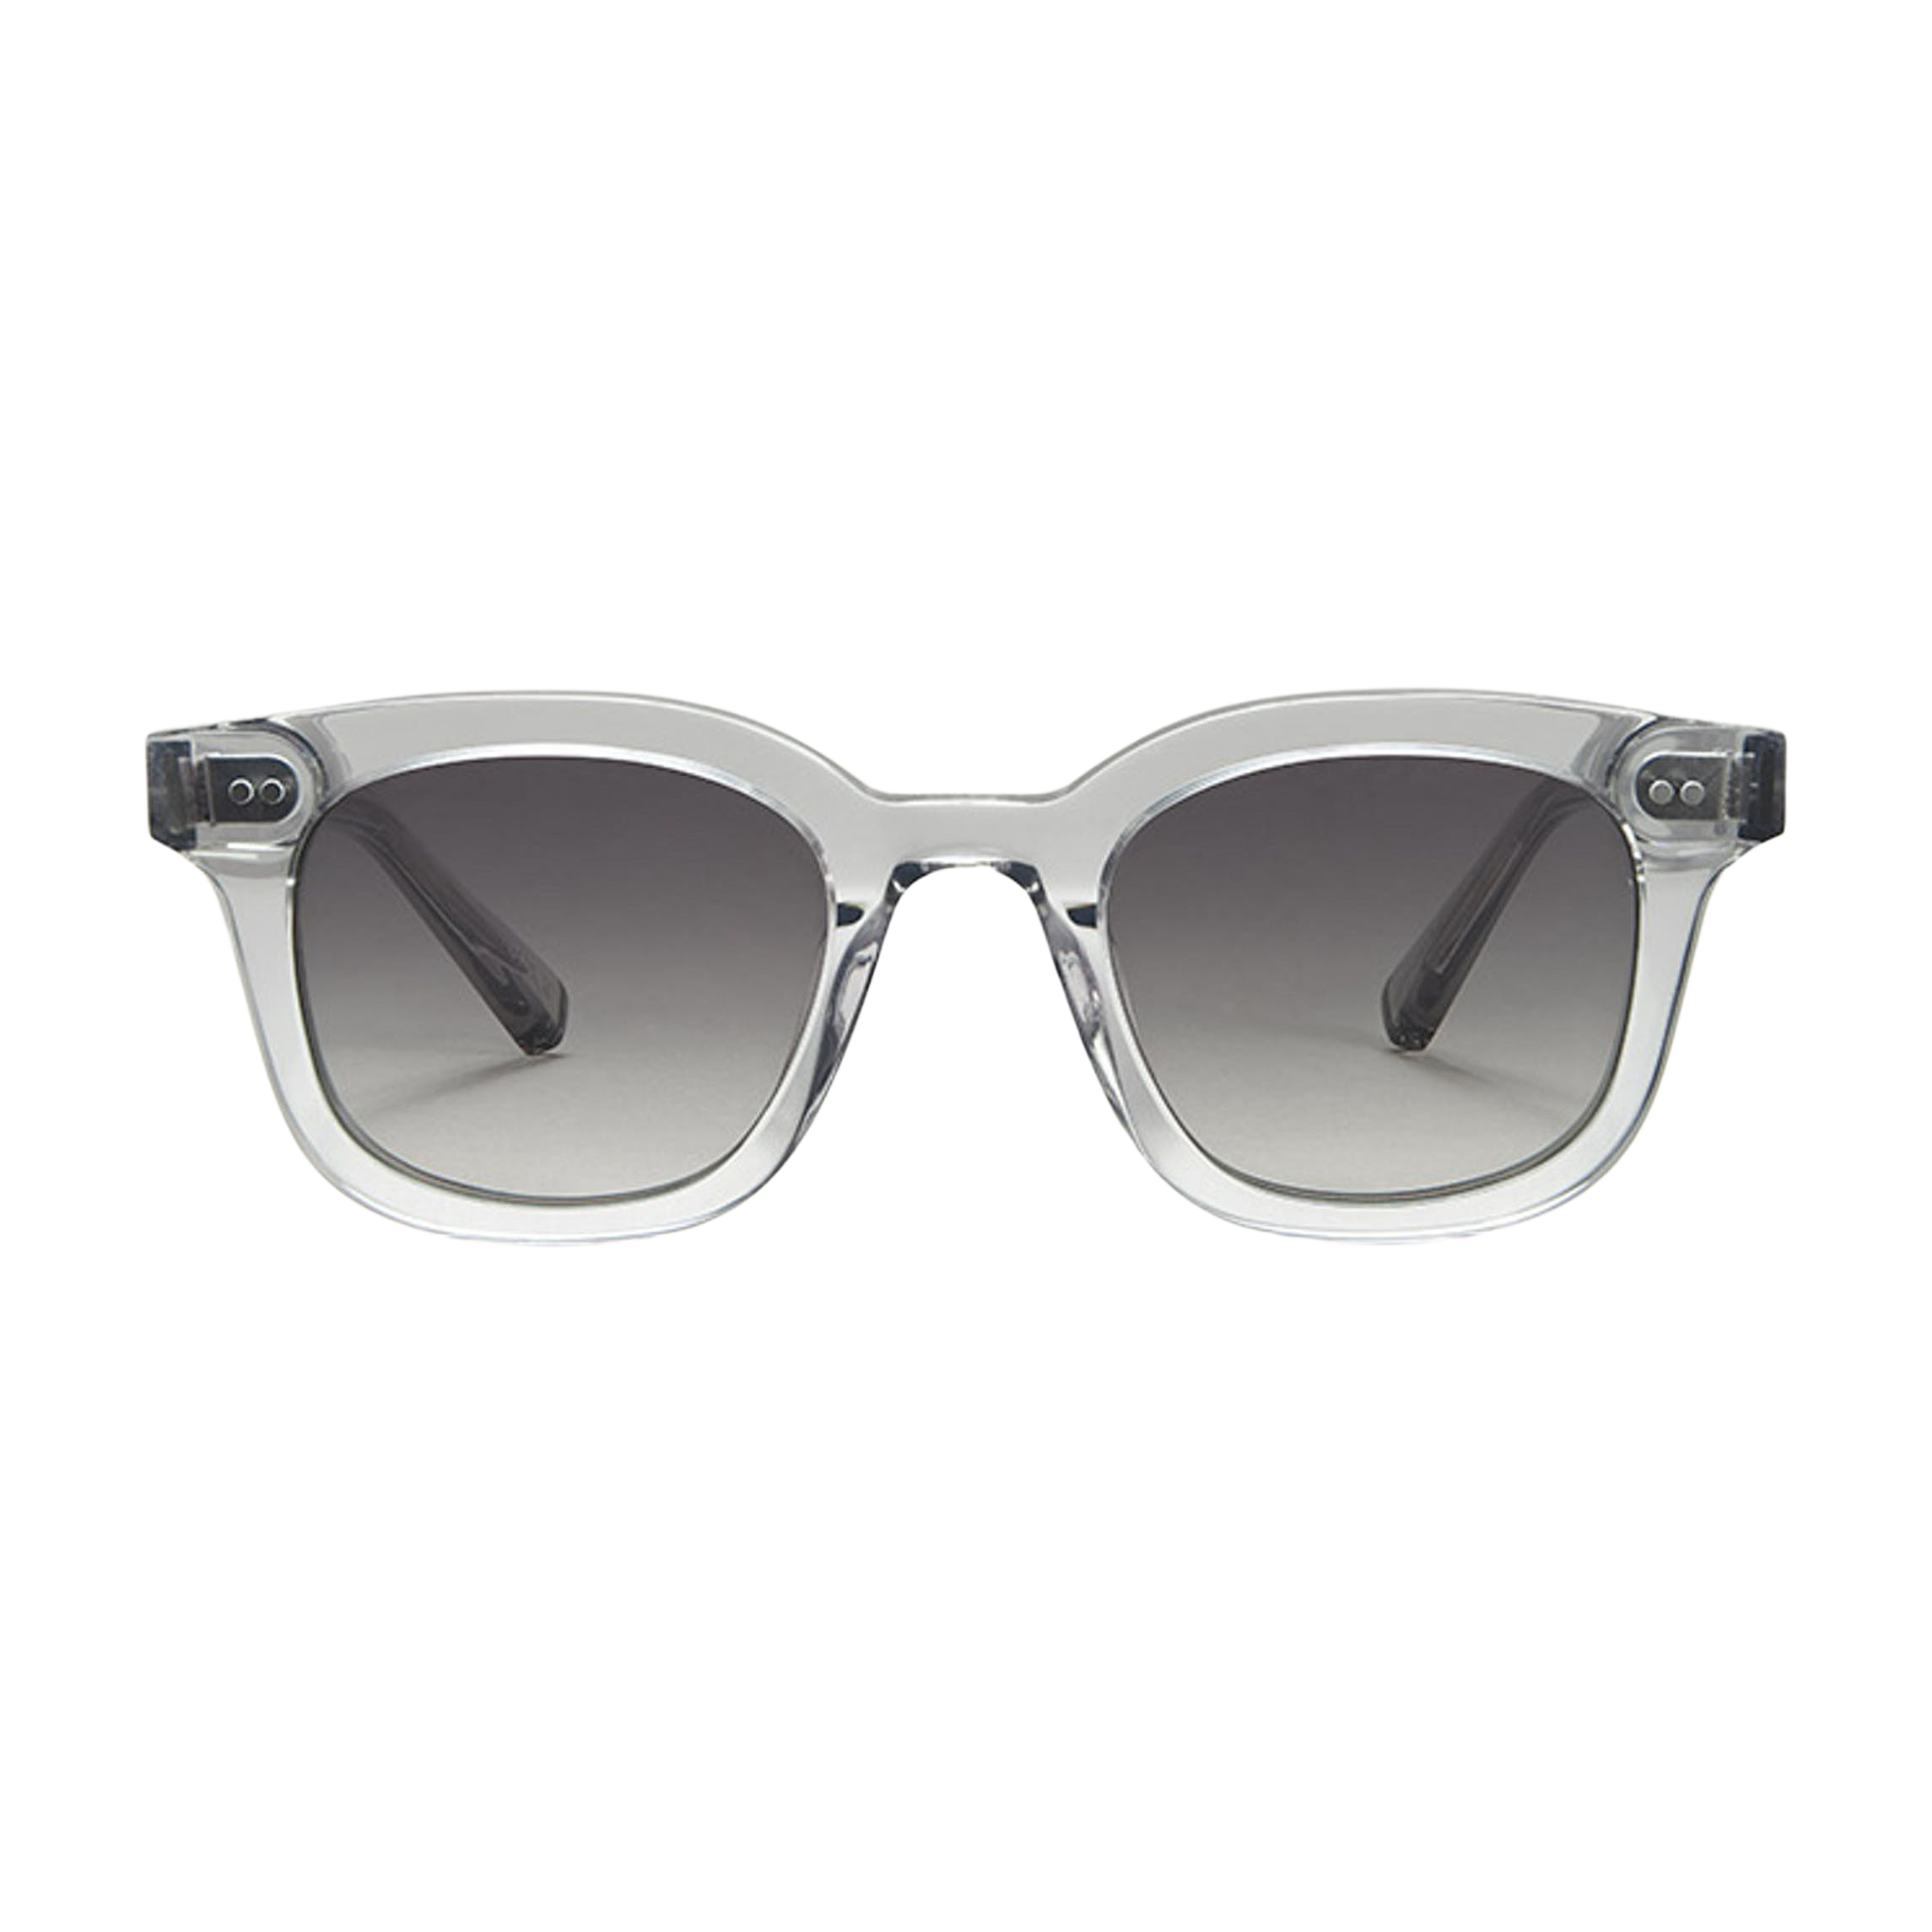 Chimi Eyewear Model 02 Grey Gradient Lenses Sunglasses 47mm Front